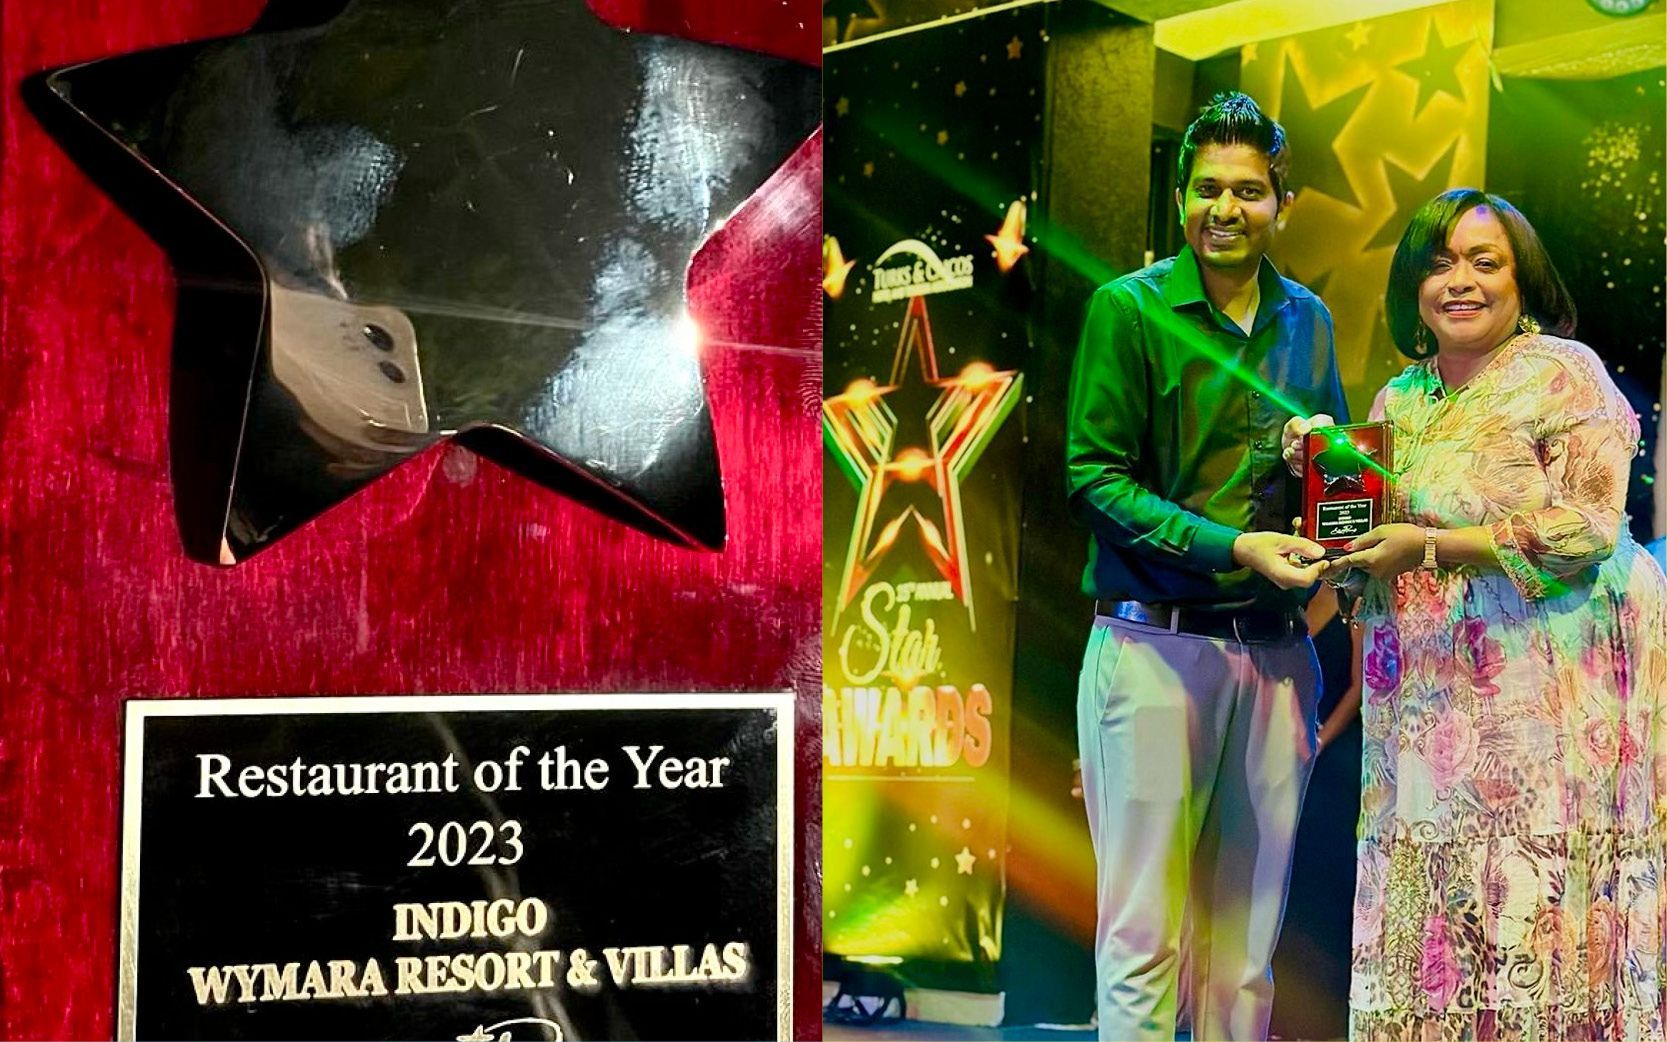 Indigo awarded Best Restaurant of the Year by TCHTA Star Awards